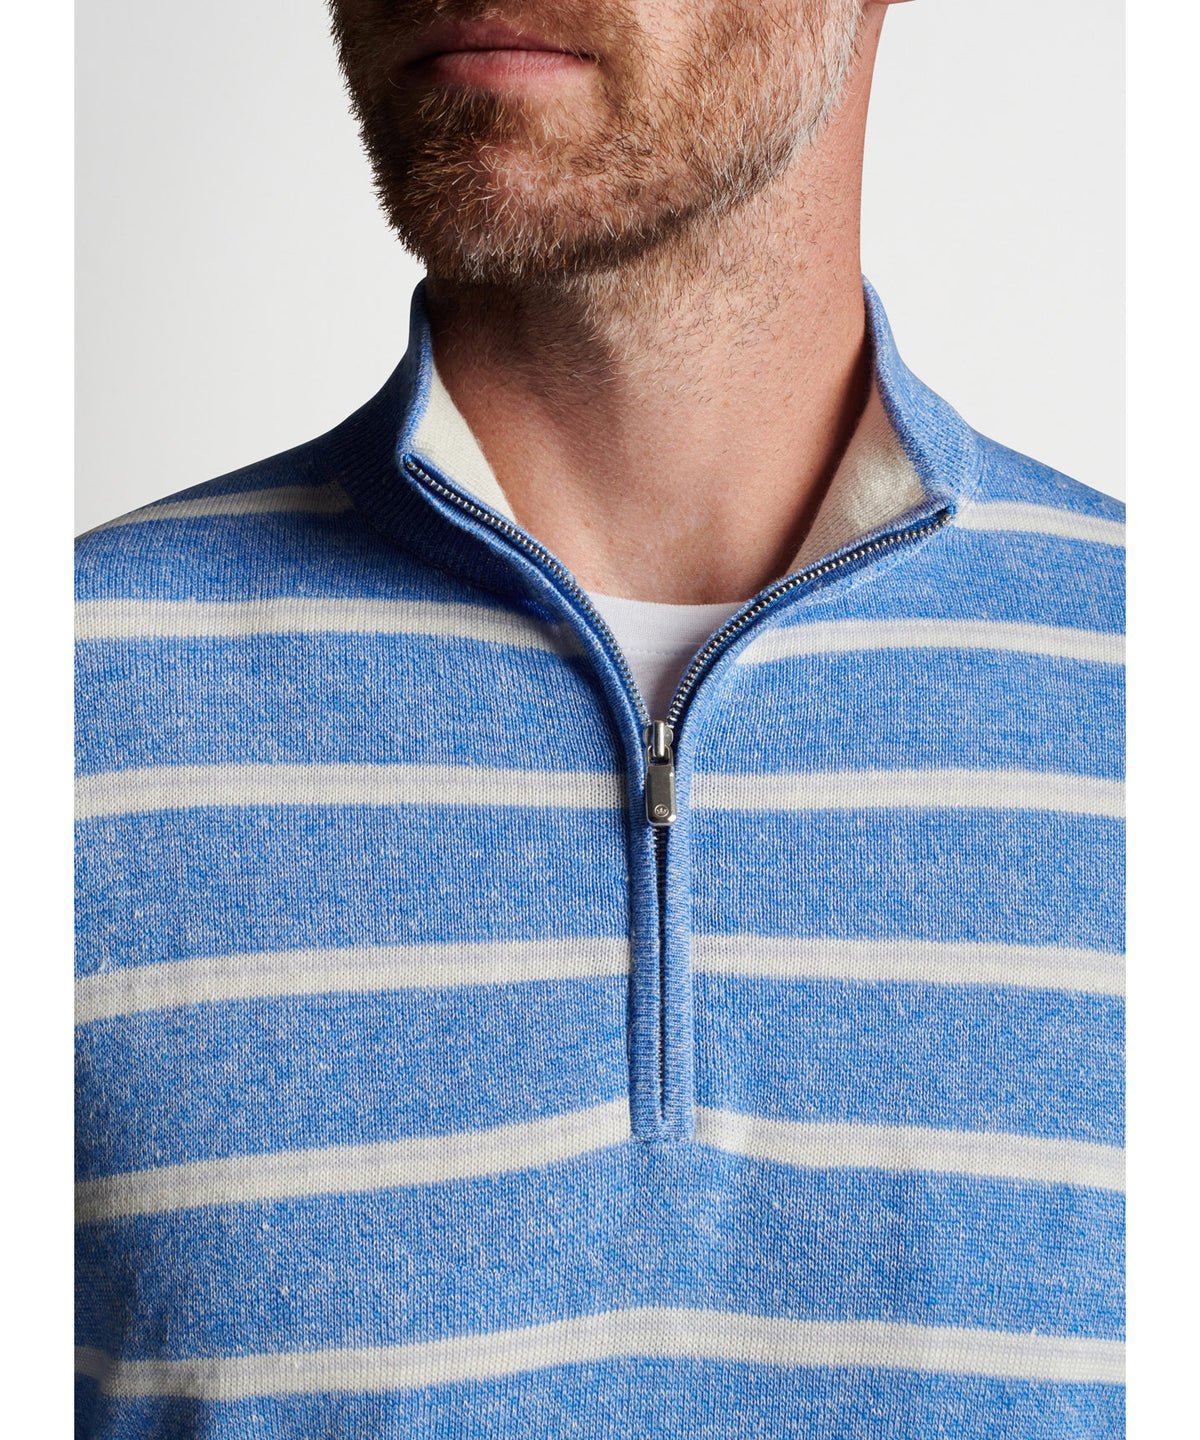 Peter Millar Multi-Stripe Jersey Quarter-Zip Pullover